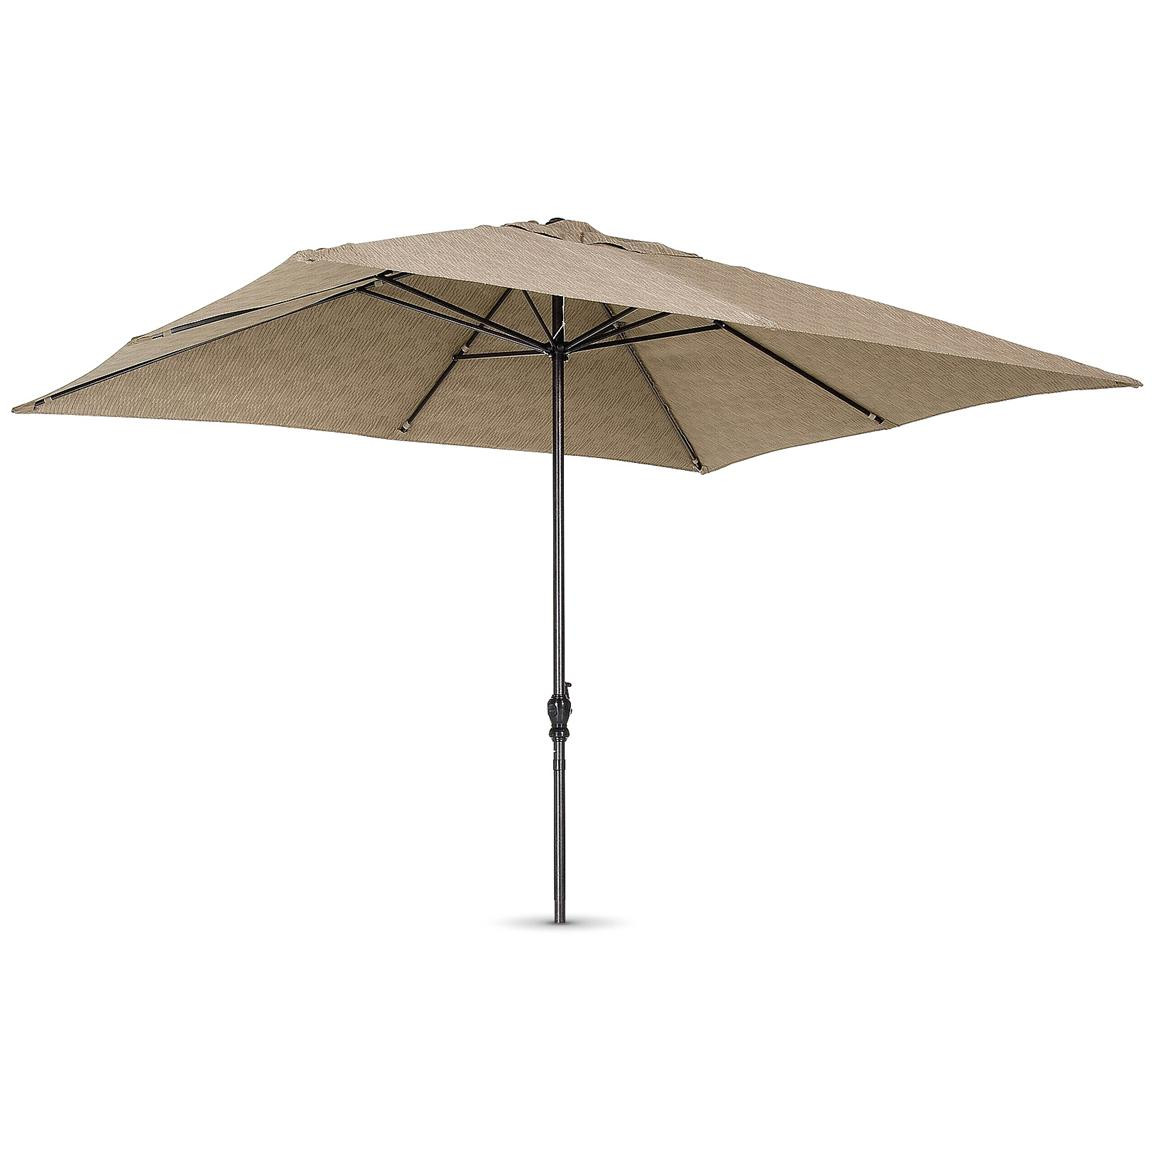 Best ideas about Rectangle Patio Umbrella
. Save or Pin 8x10 Rectangular Umbrella Khaki Patio Now.